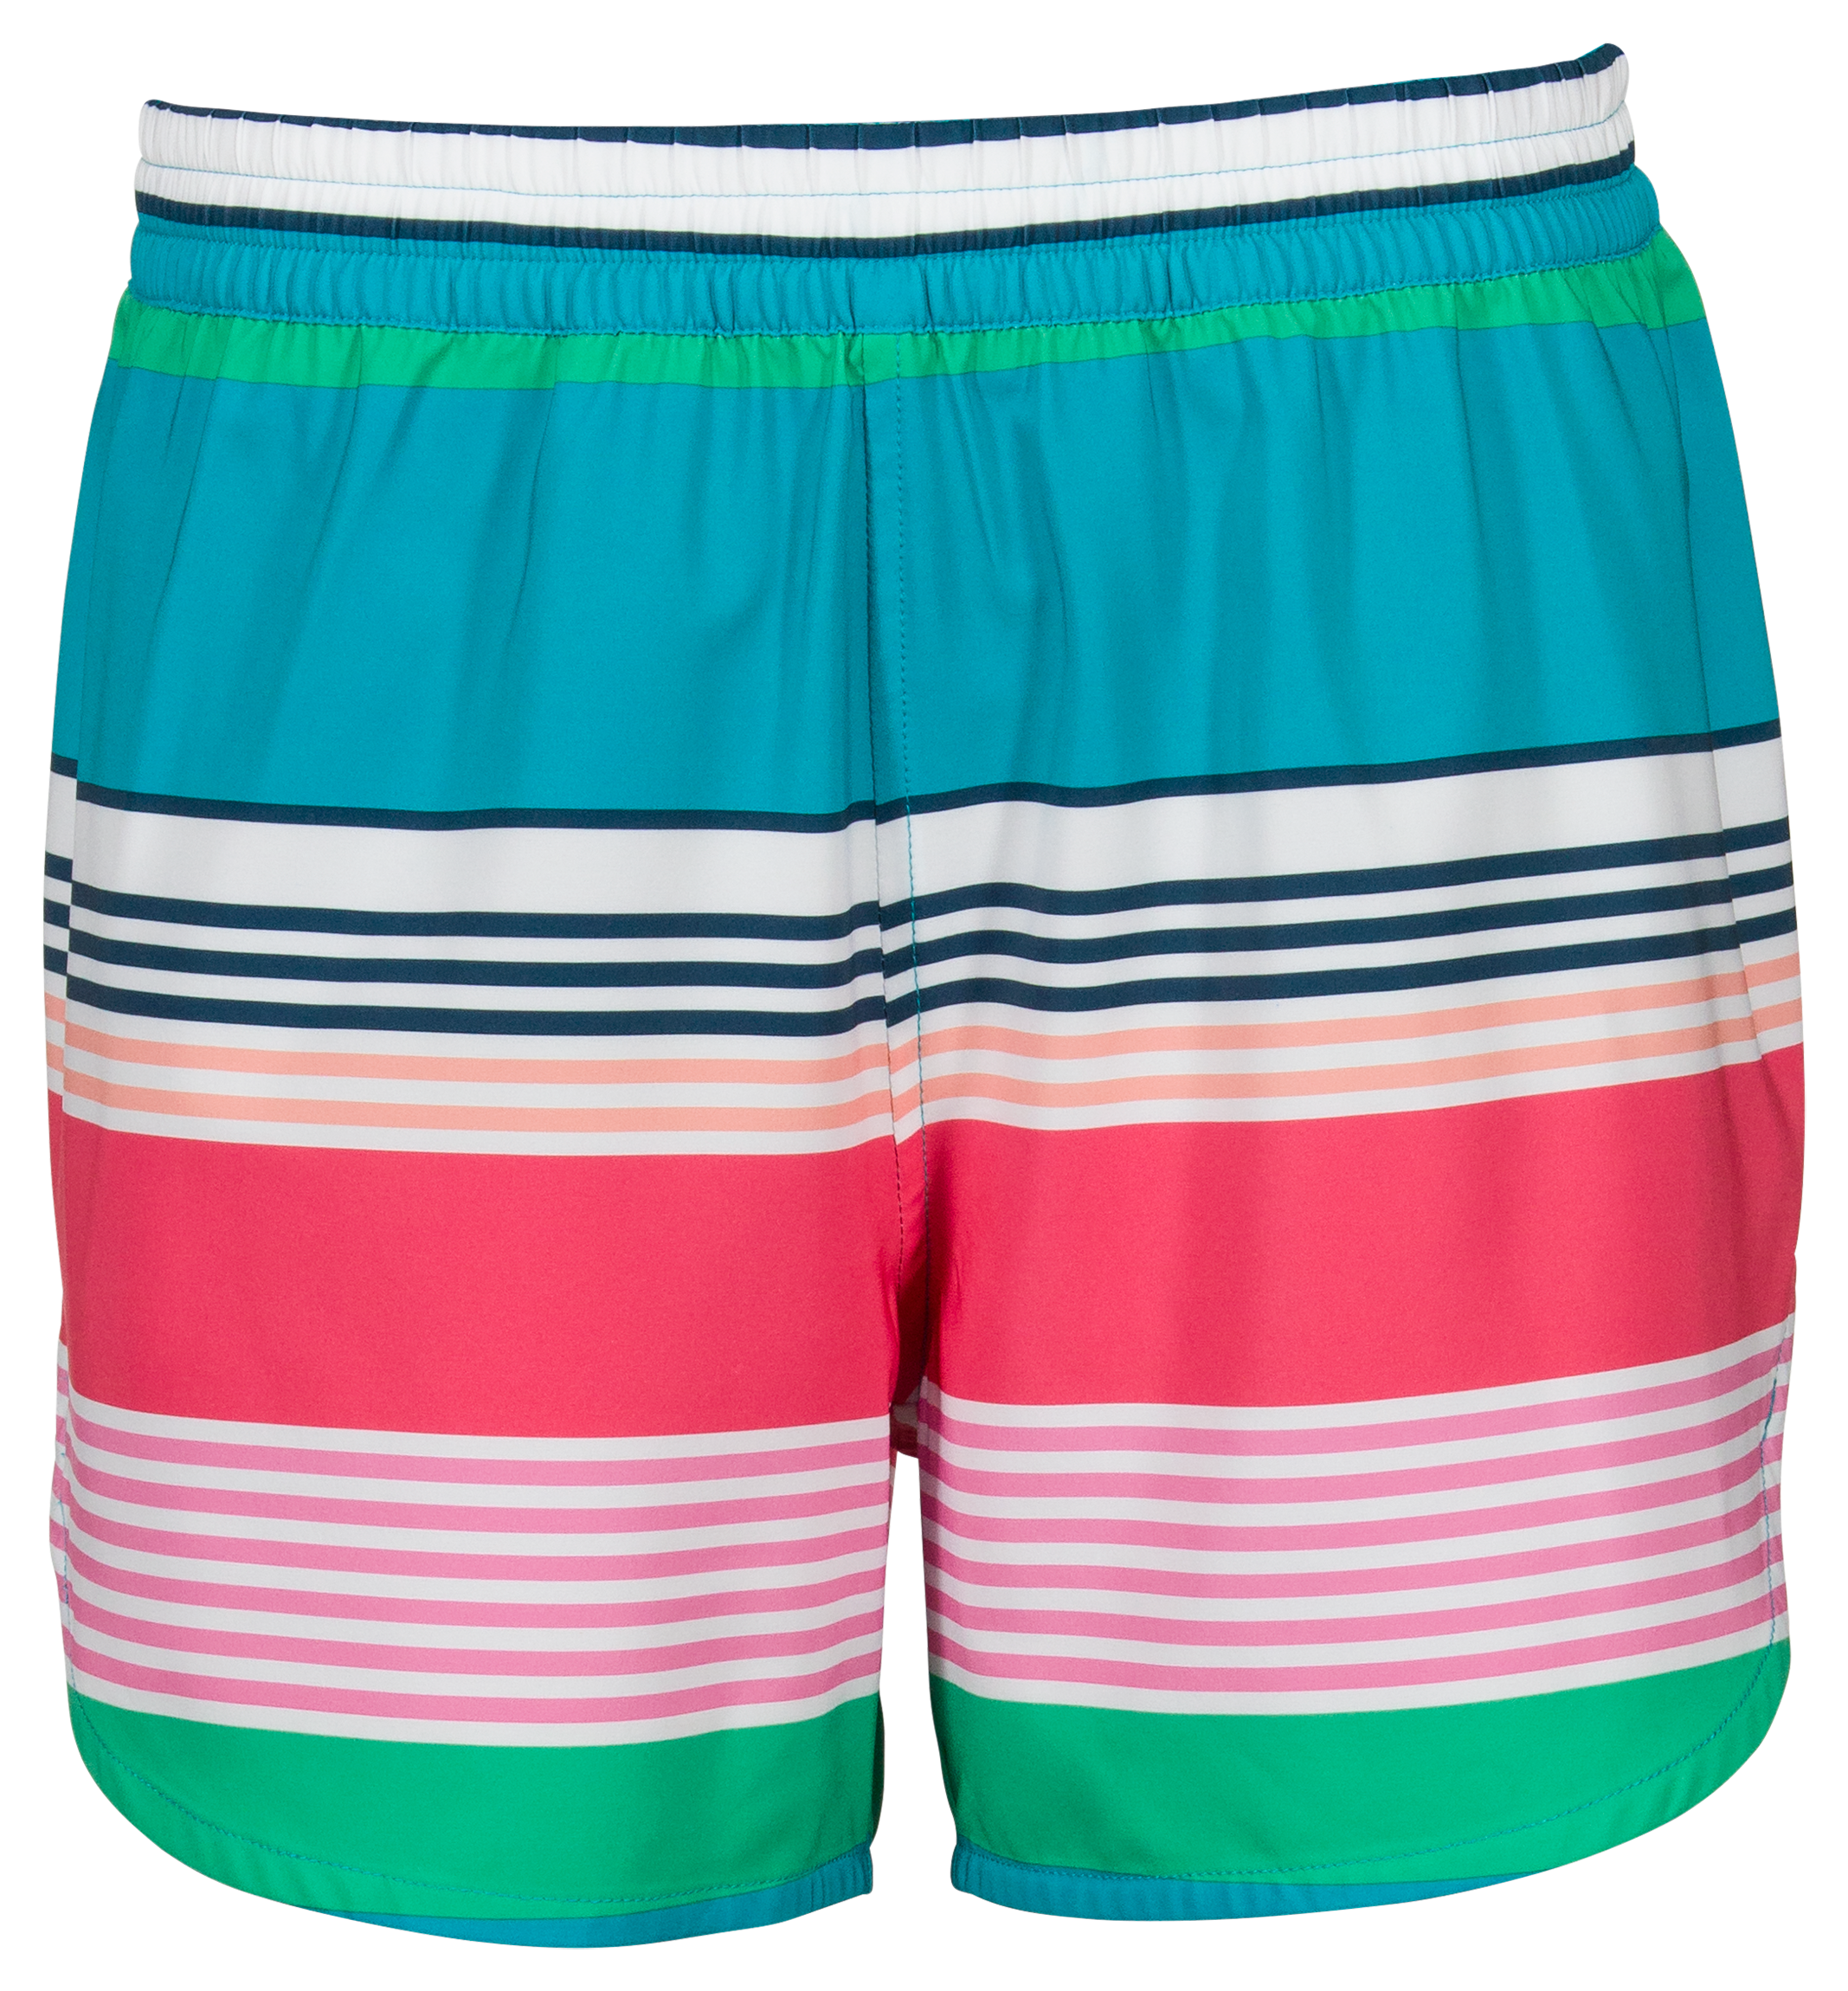 World Wide Sportsman Charter Print Pull-On Shorts for Ladies - Multi Stripe - XXL